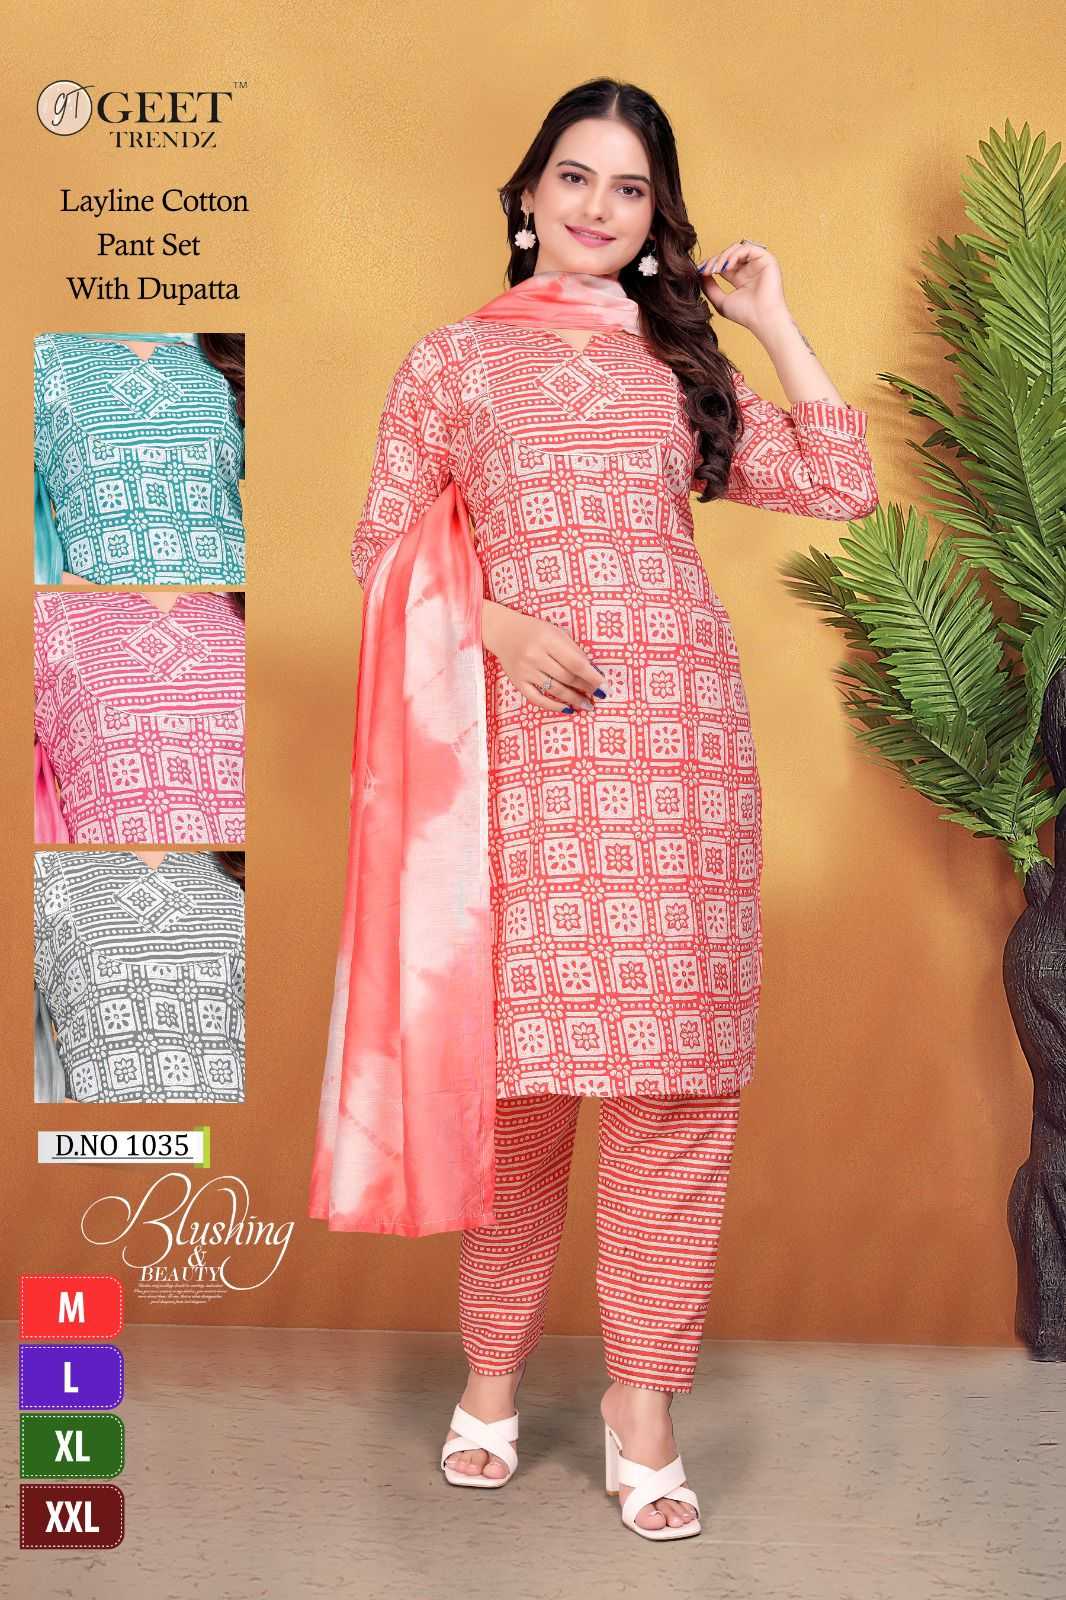 geet trendz readymade layline cotton kurti pant dupatta set collection